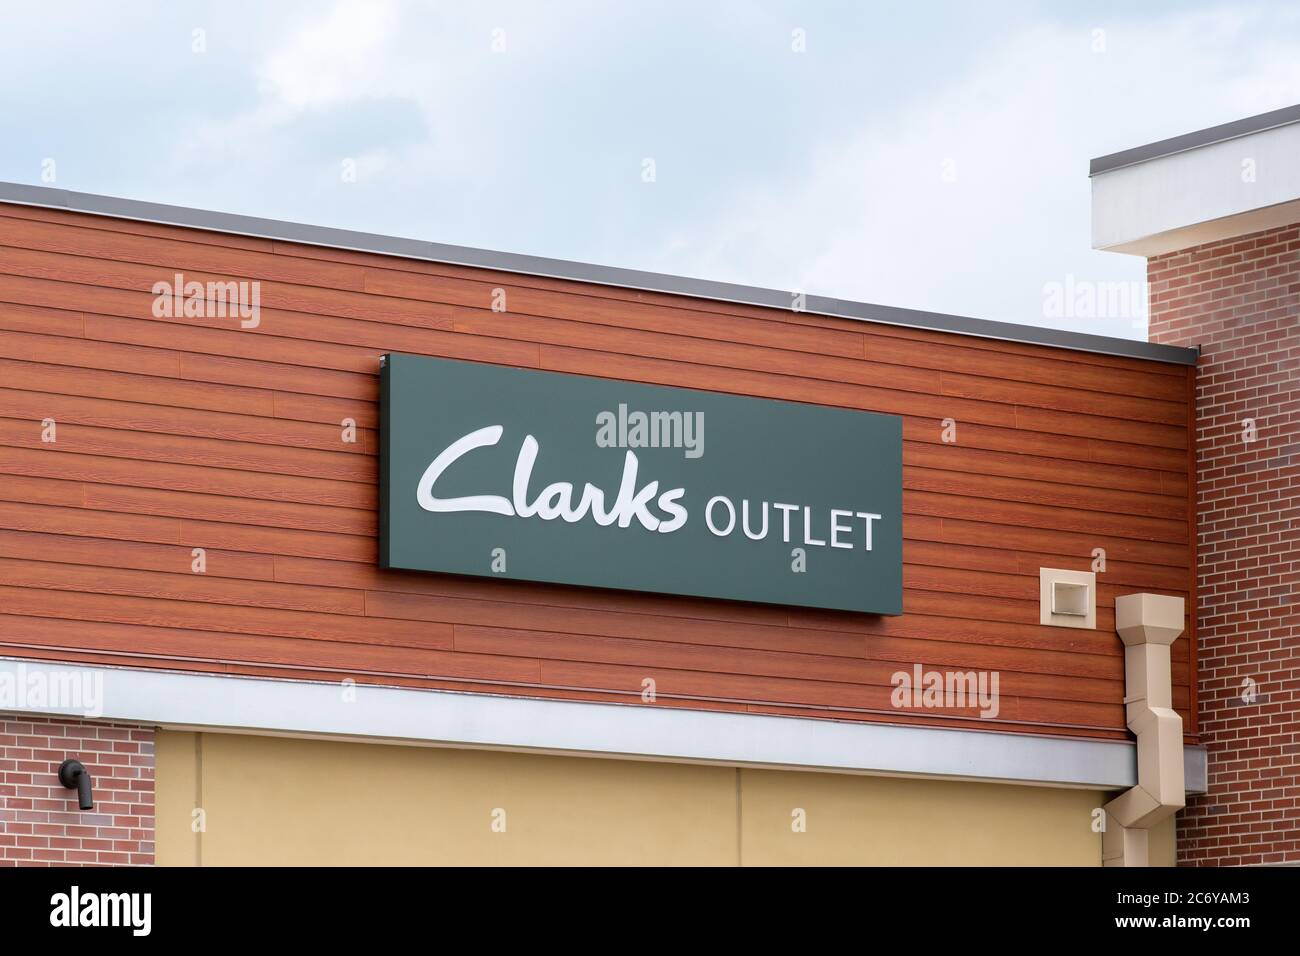 clarks gloucester premium outlets